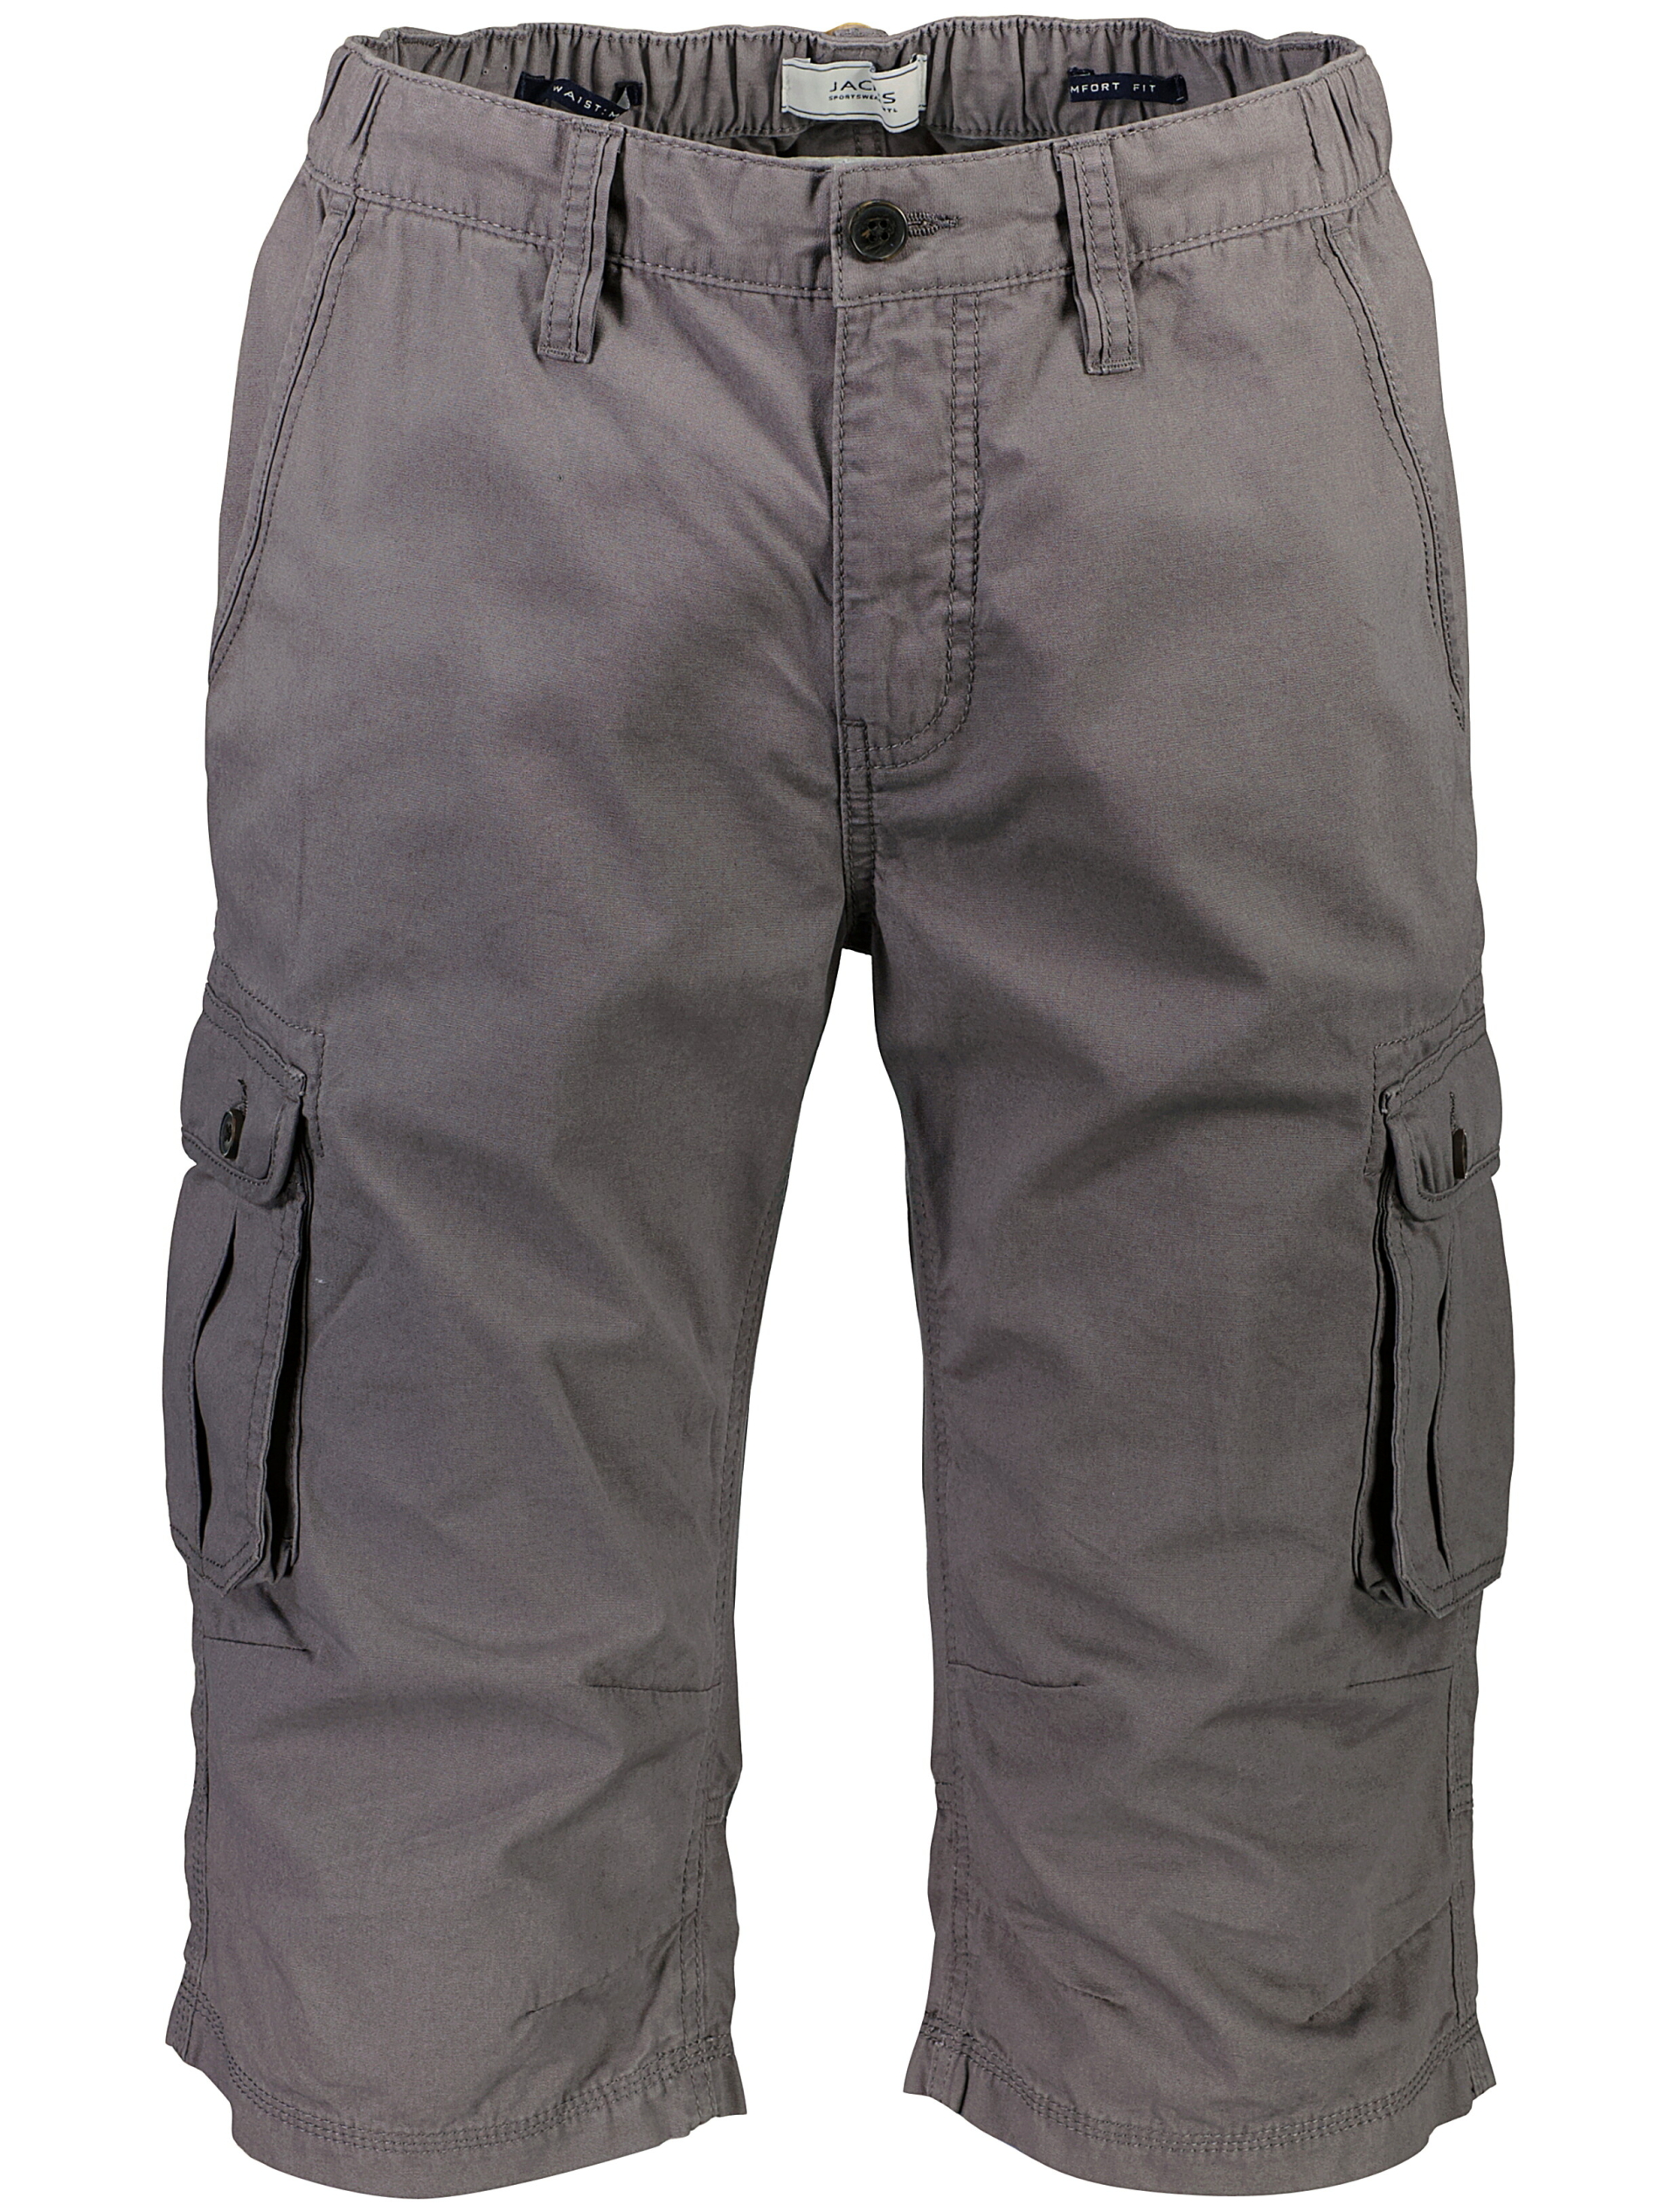 Morgan Cargo shorts grå / dk grey